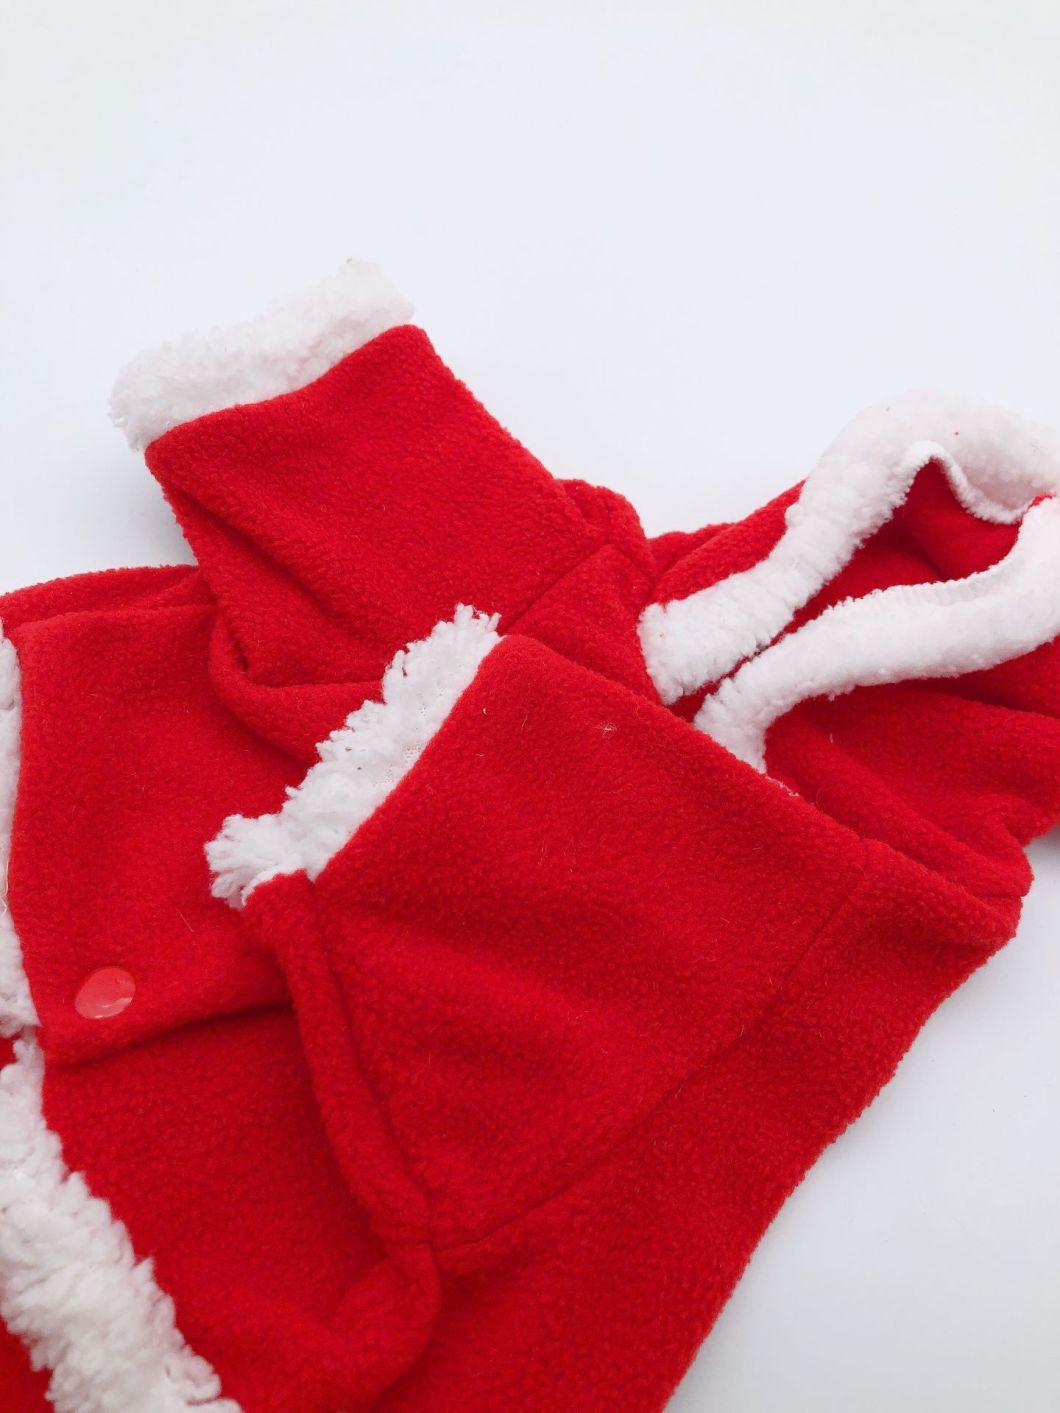 Christmas Soft Plush Dog Hoodies Shirt Pajamas Cats Coats Pet Wear Products Pets Clothing Clothes